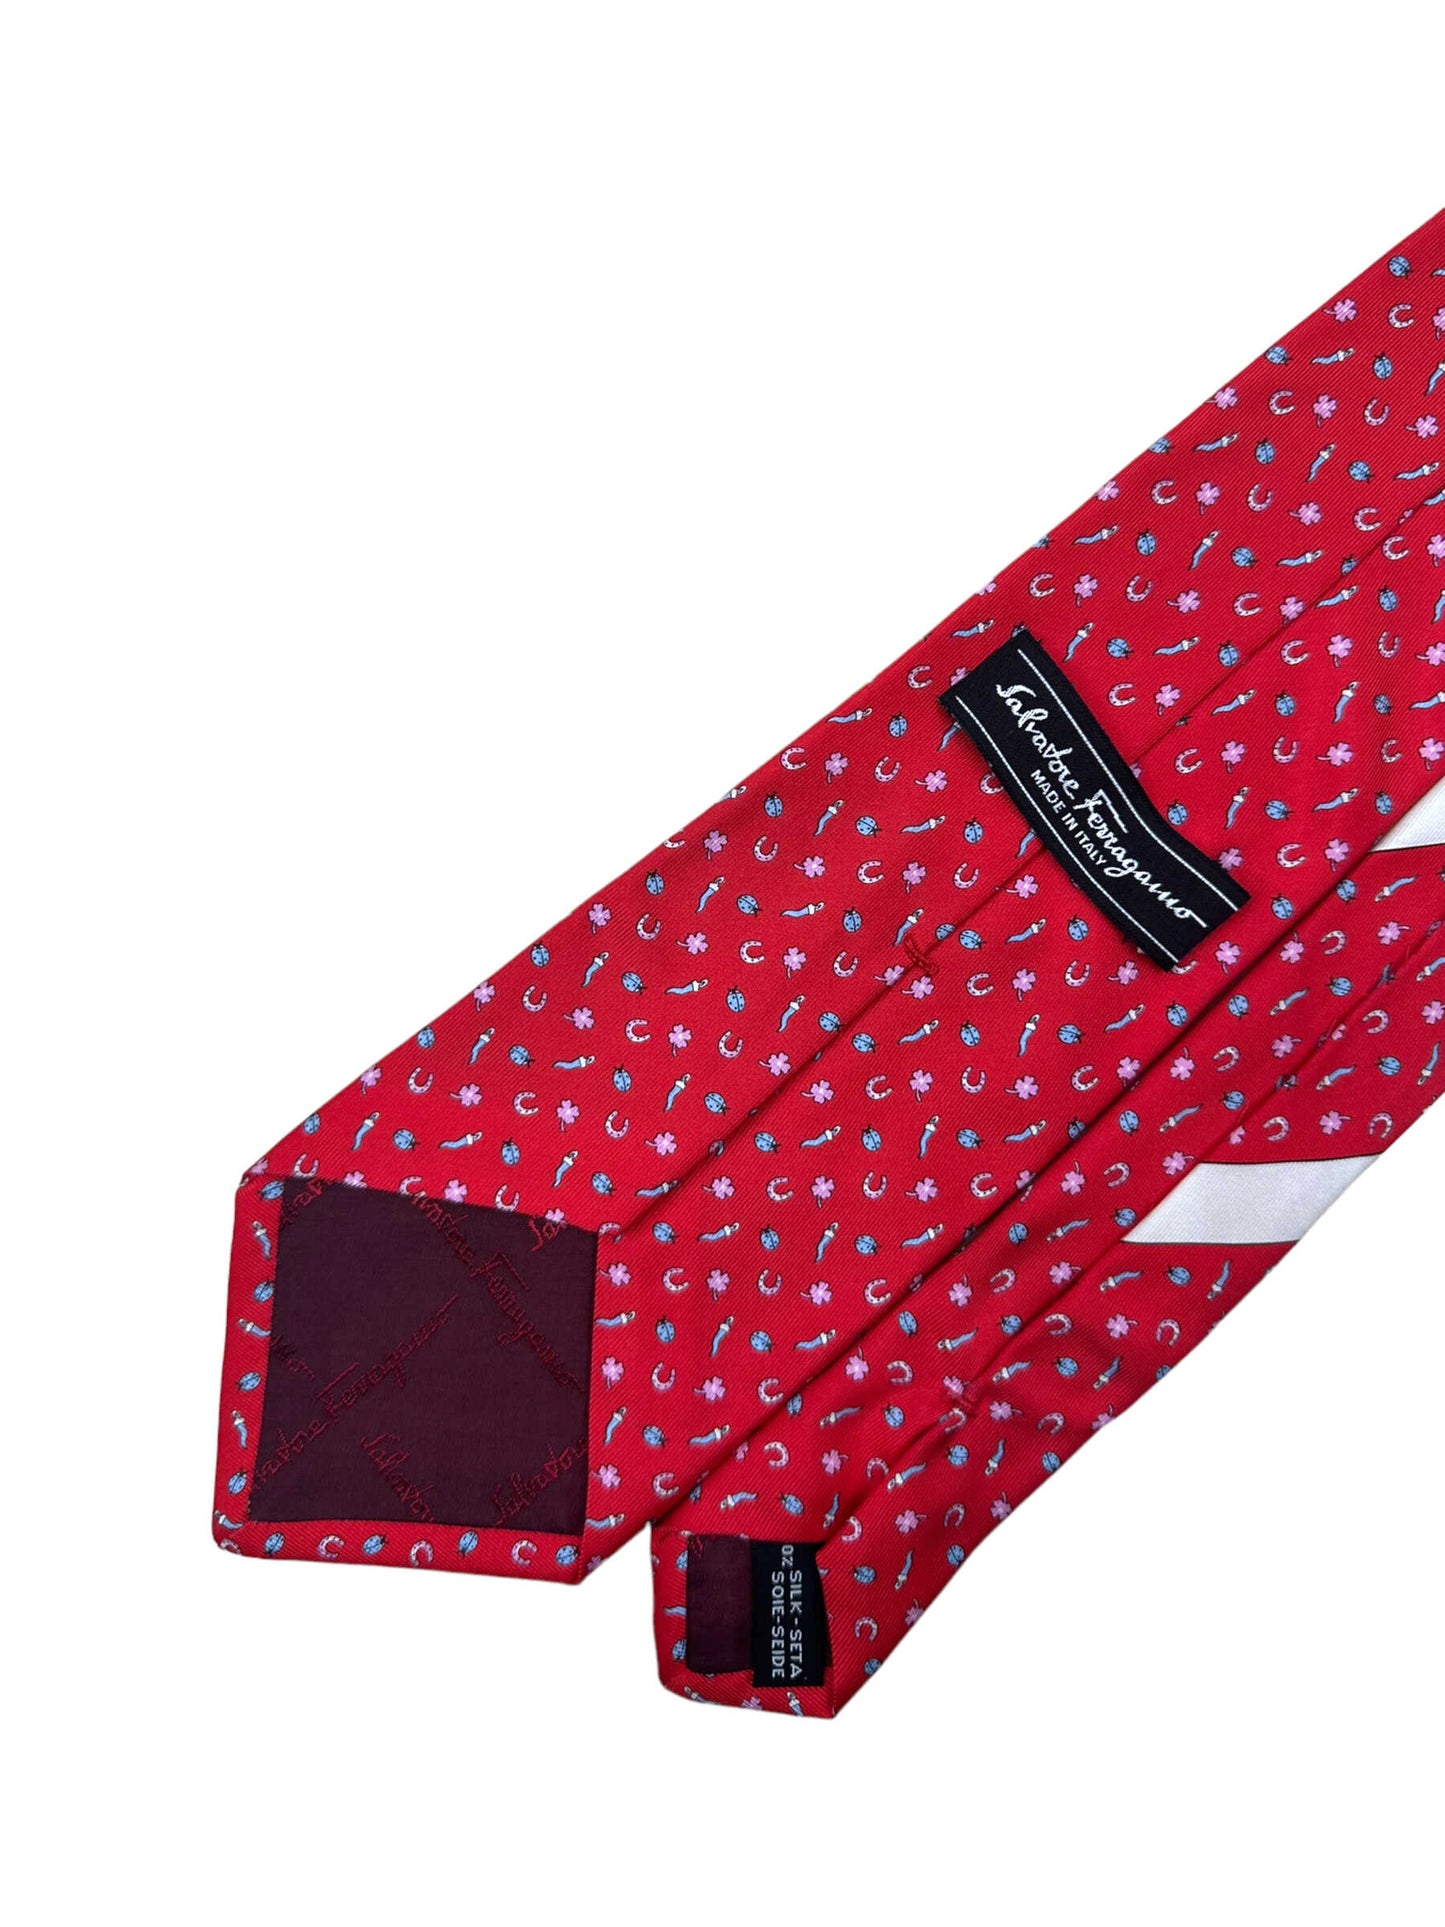 Salvatore Ferragamo Red Novelty Silk Tie - Genuine Design luxury consignment Calgary, Alberta, Canada New & pre-owned clothing, shoes, accessories.